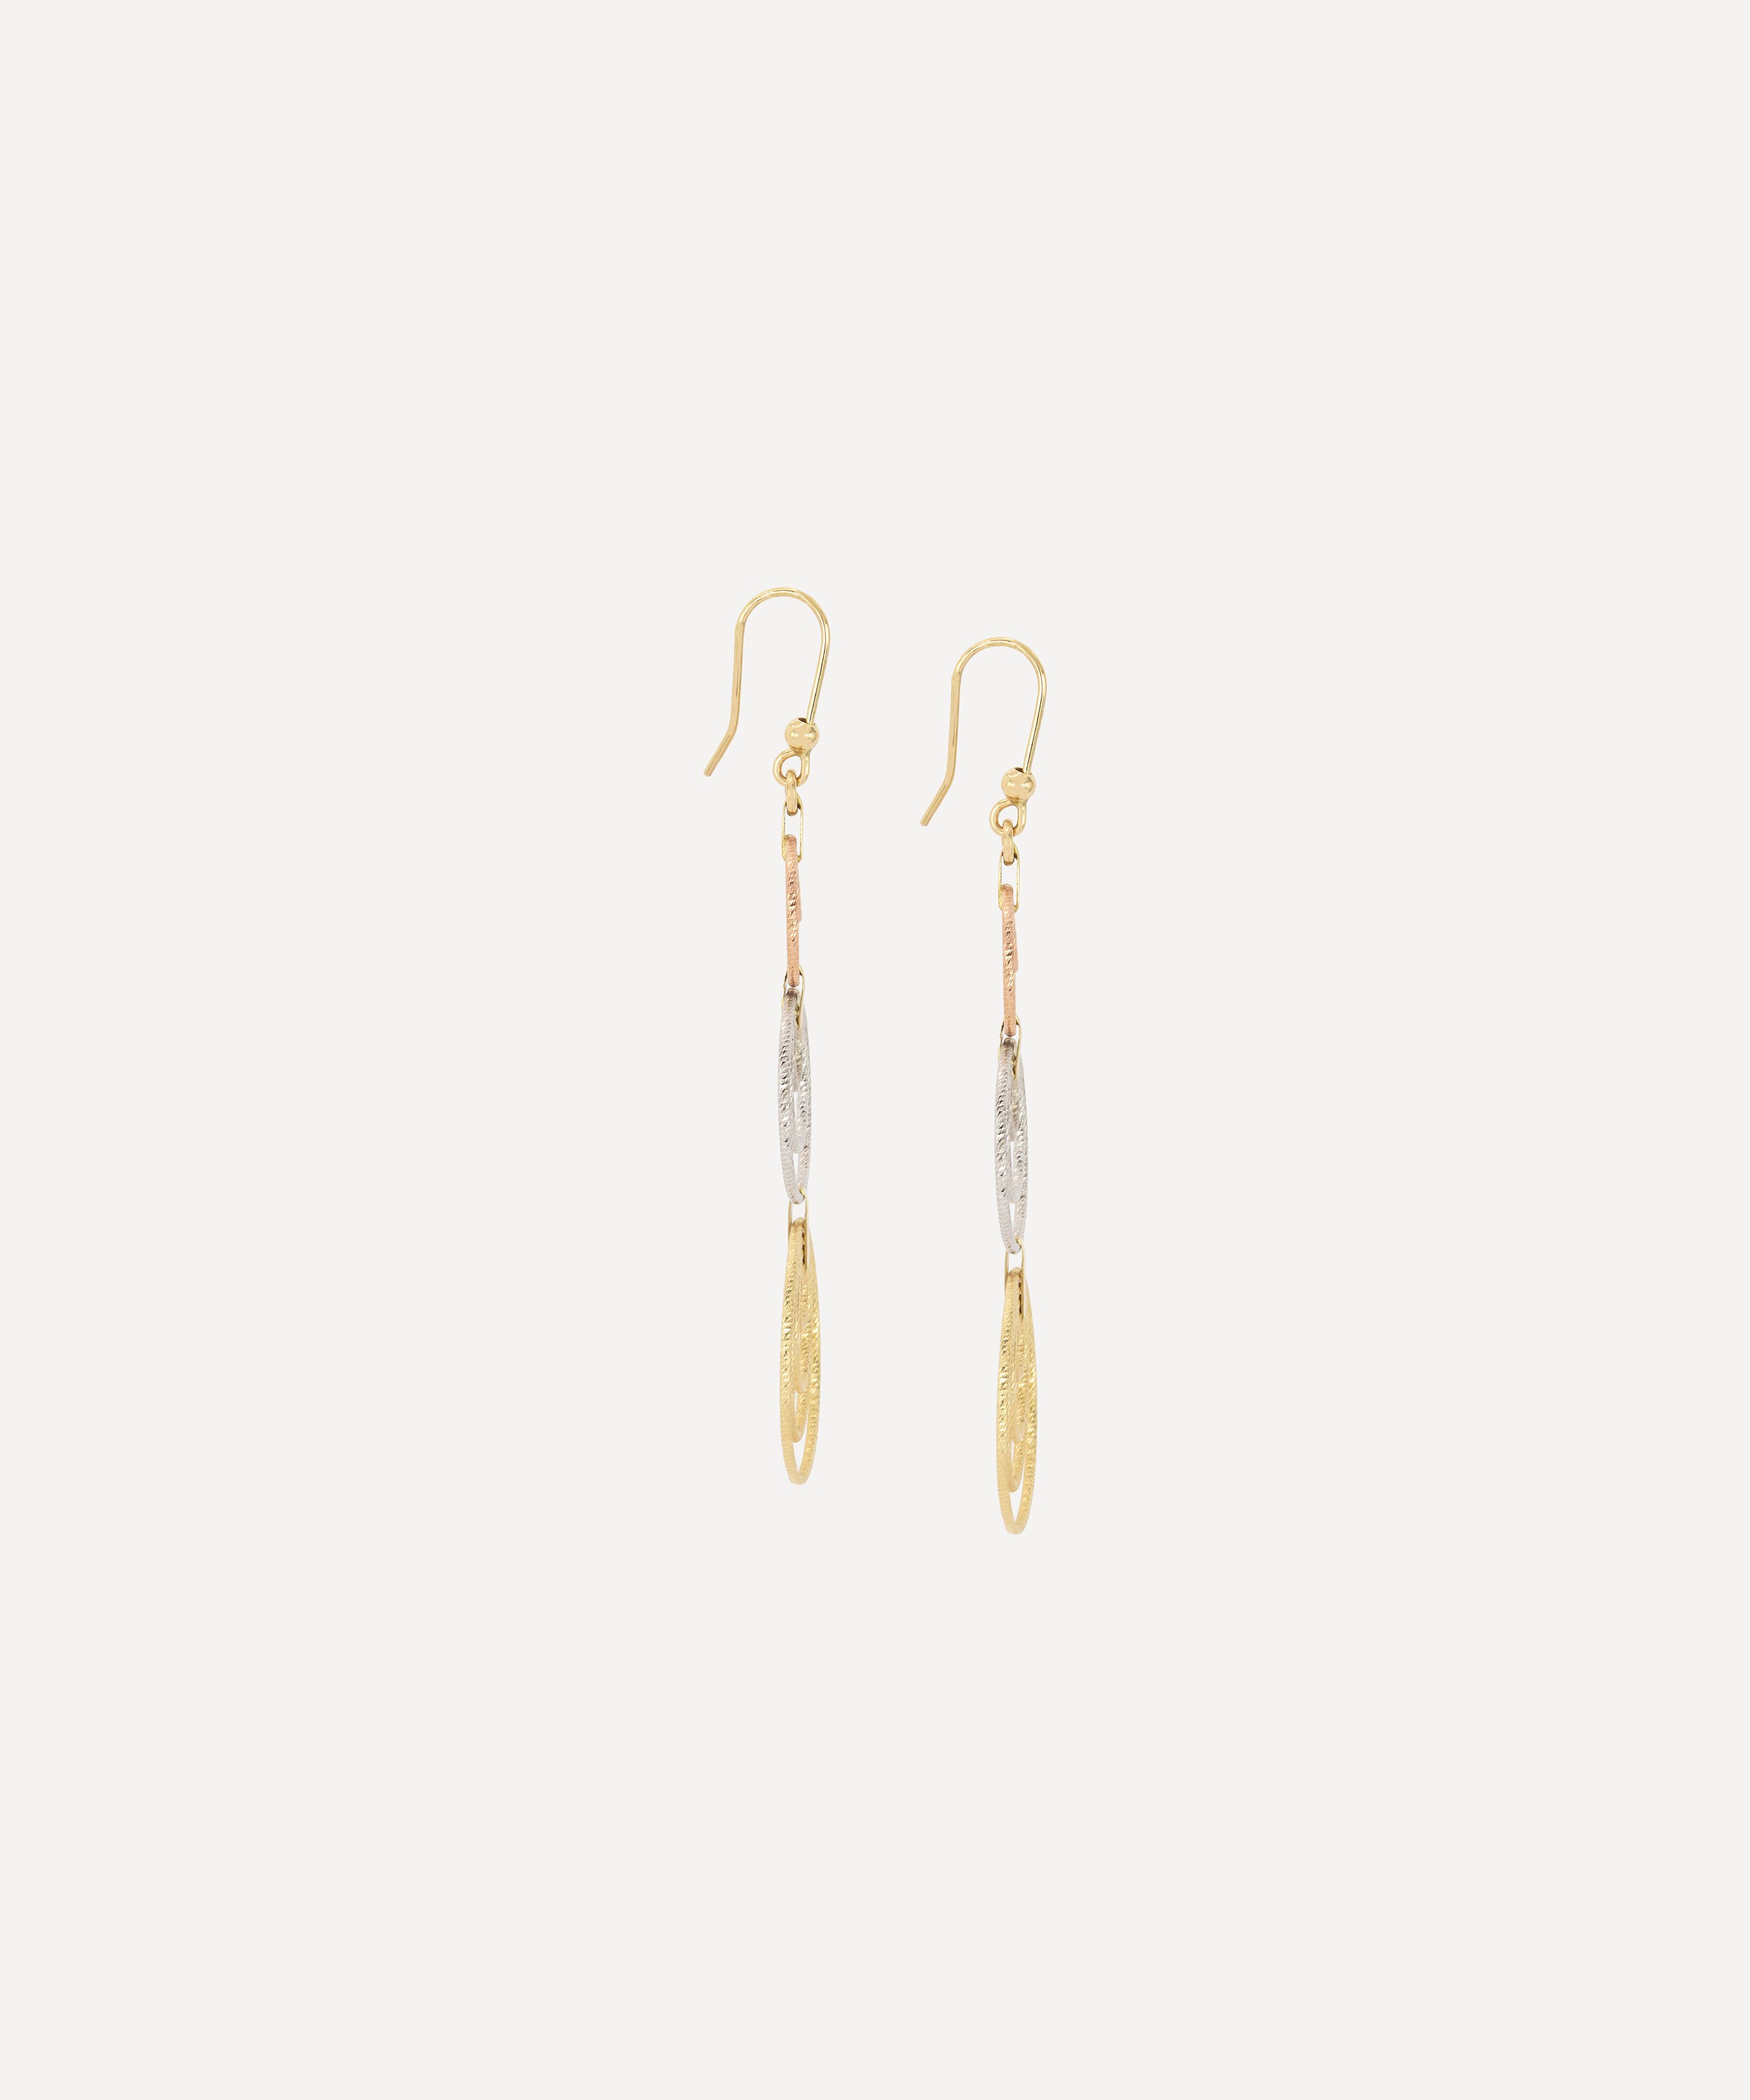 Kojis 14ct Gold Tri-Colour Hoop Earrings